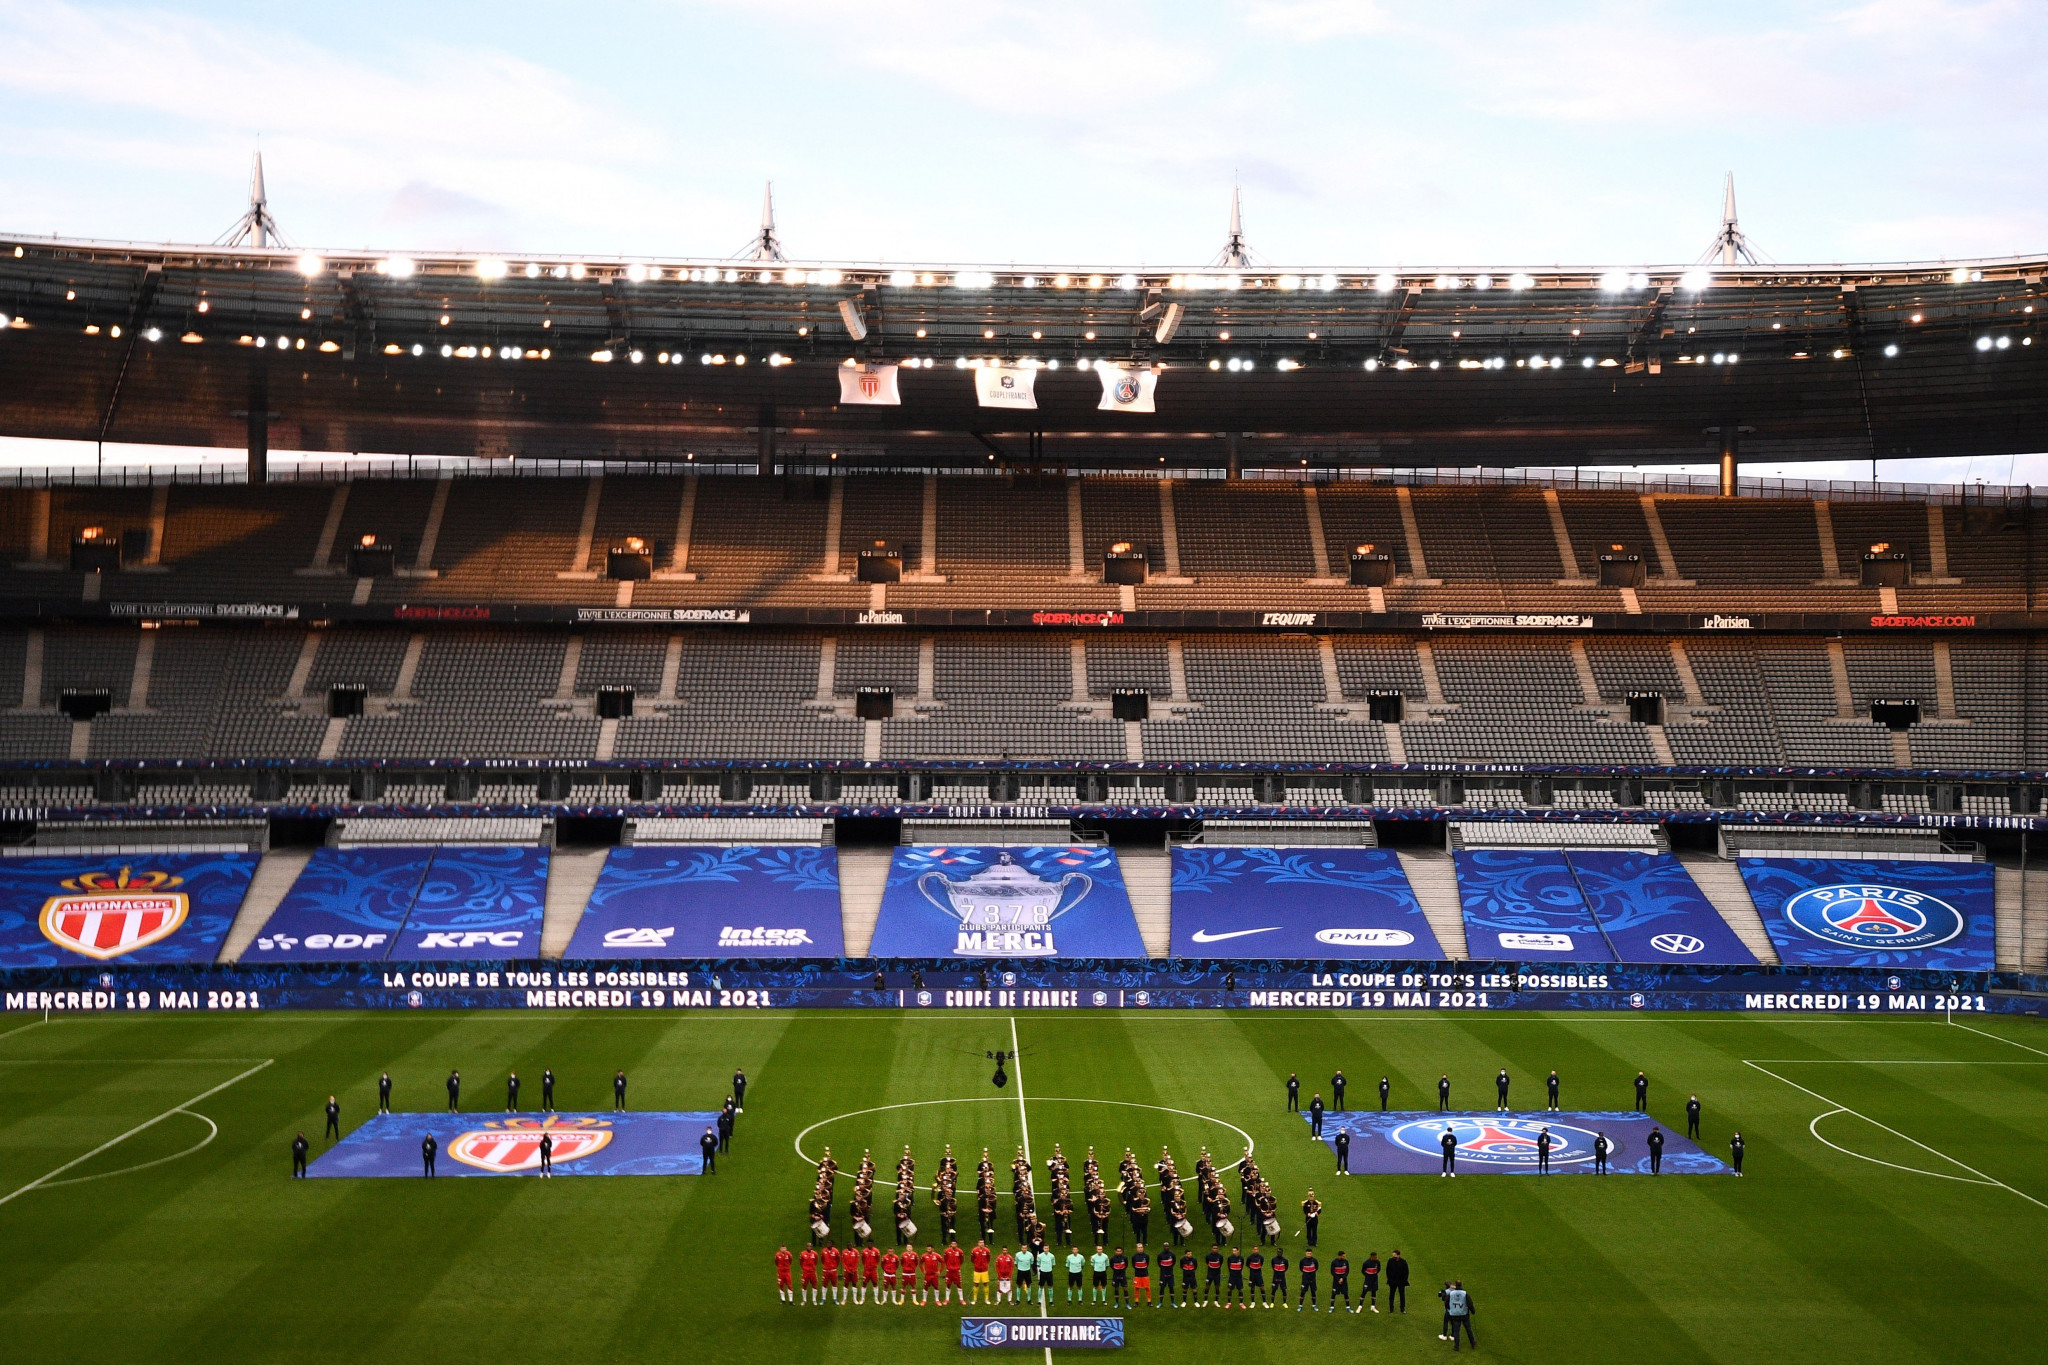 Paris Saint-Germain apply to take over key Paris 2024 venue Stade de France